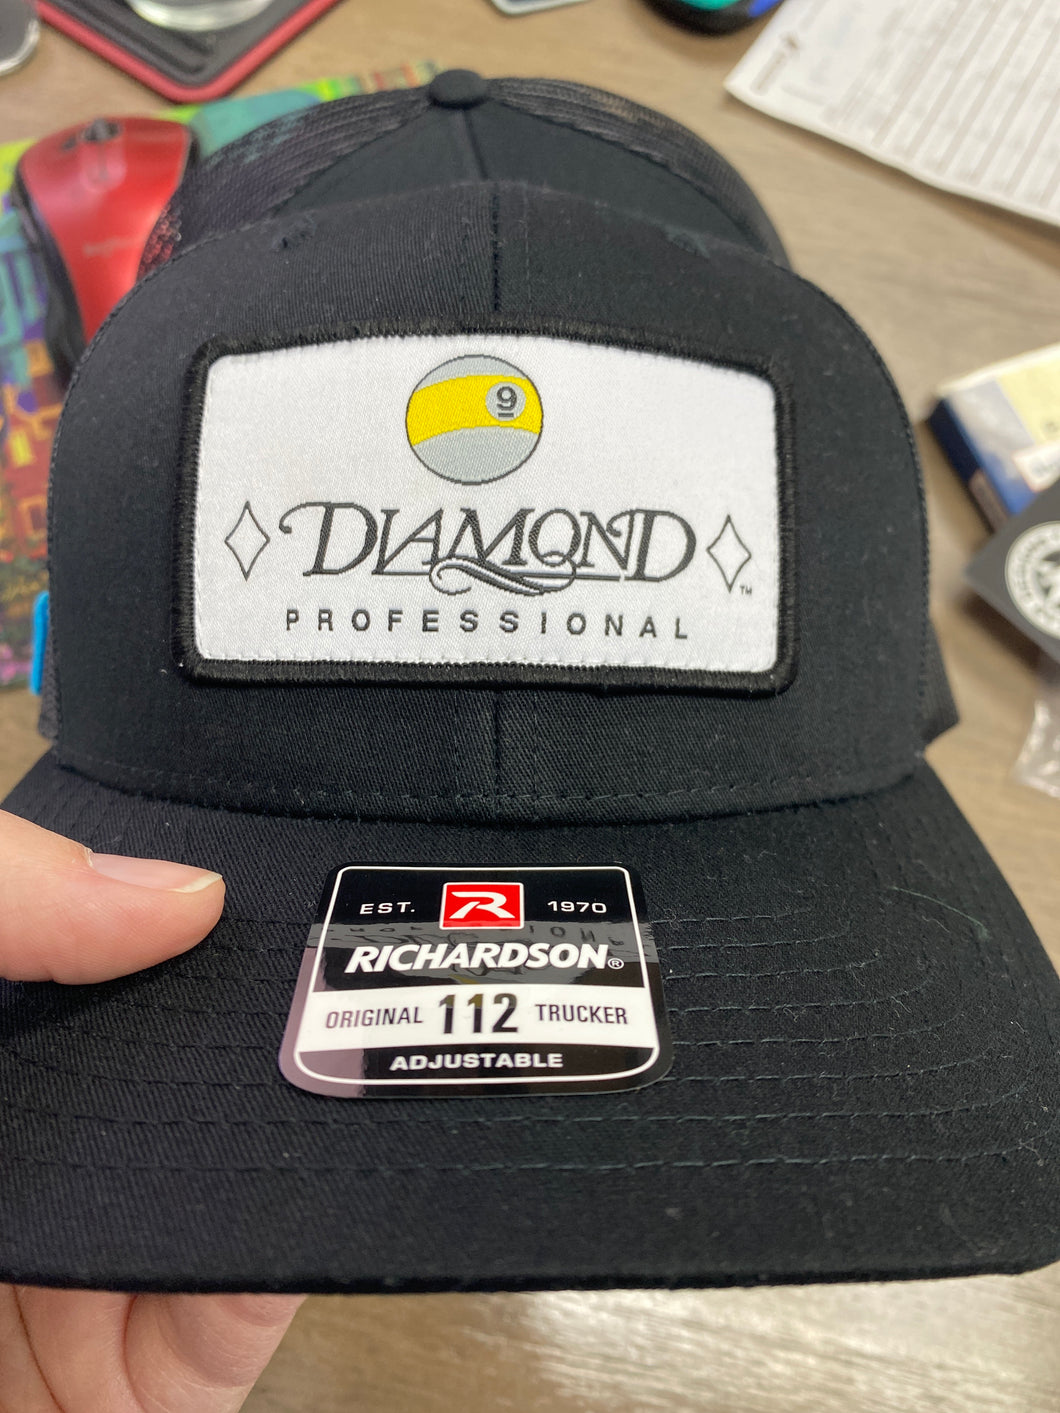 DIAMOND PROFESSIONAL LOGO HATS